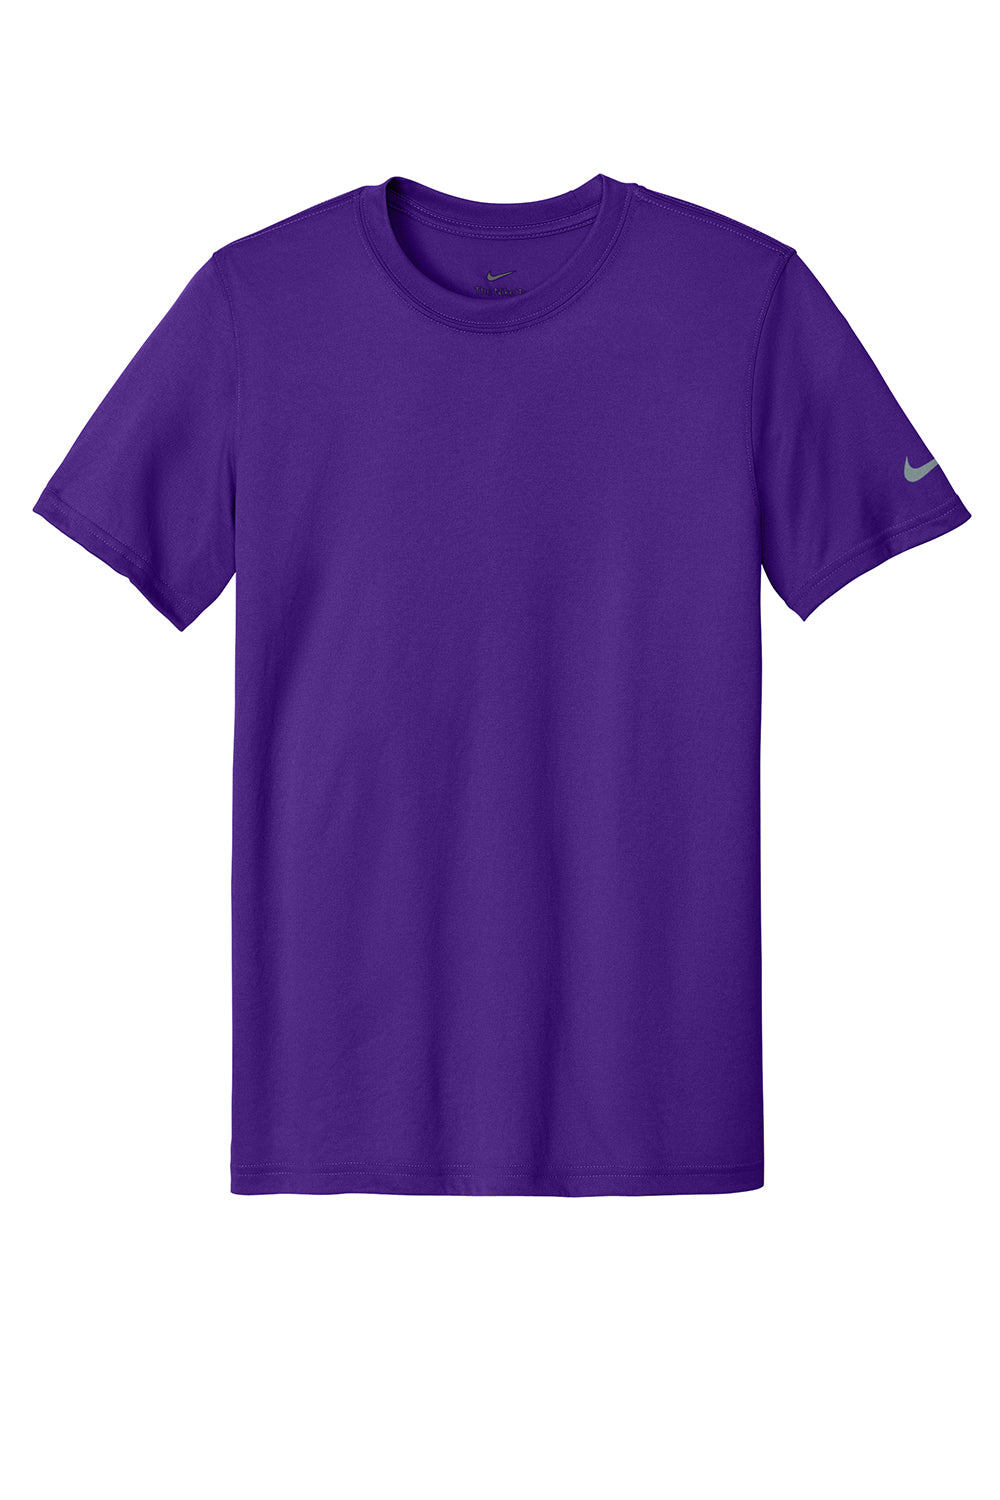 Nike NKDX8730 Mens rLegend Dri-Fit Moisture Wicking Short Sleeve Crewneck T-Shirt Court Purple Flat Front